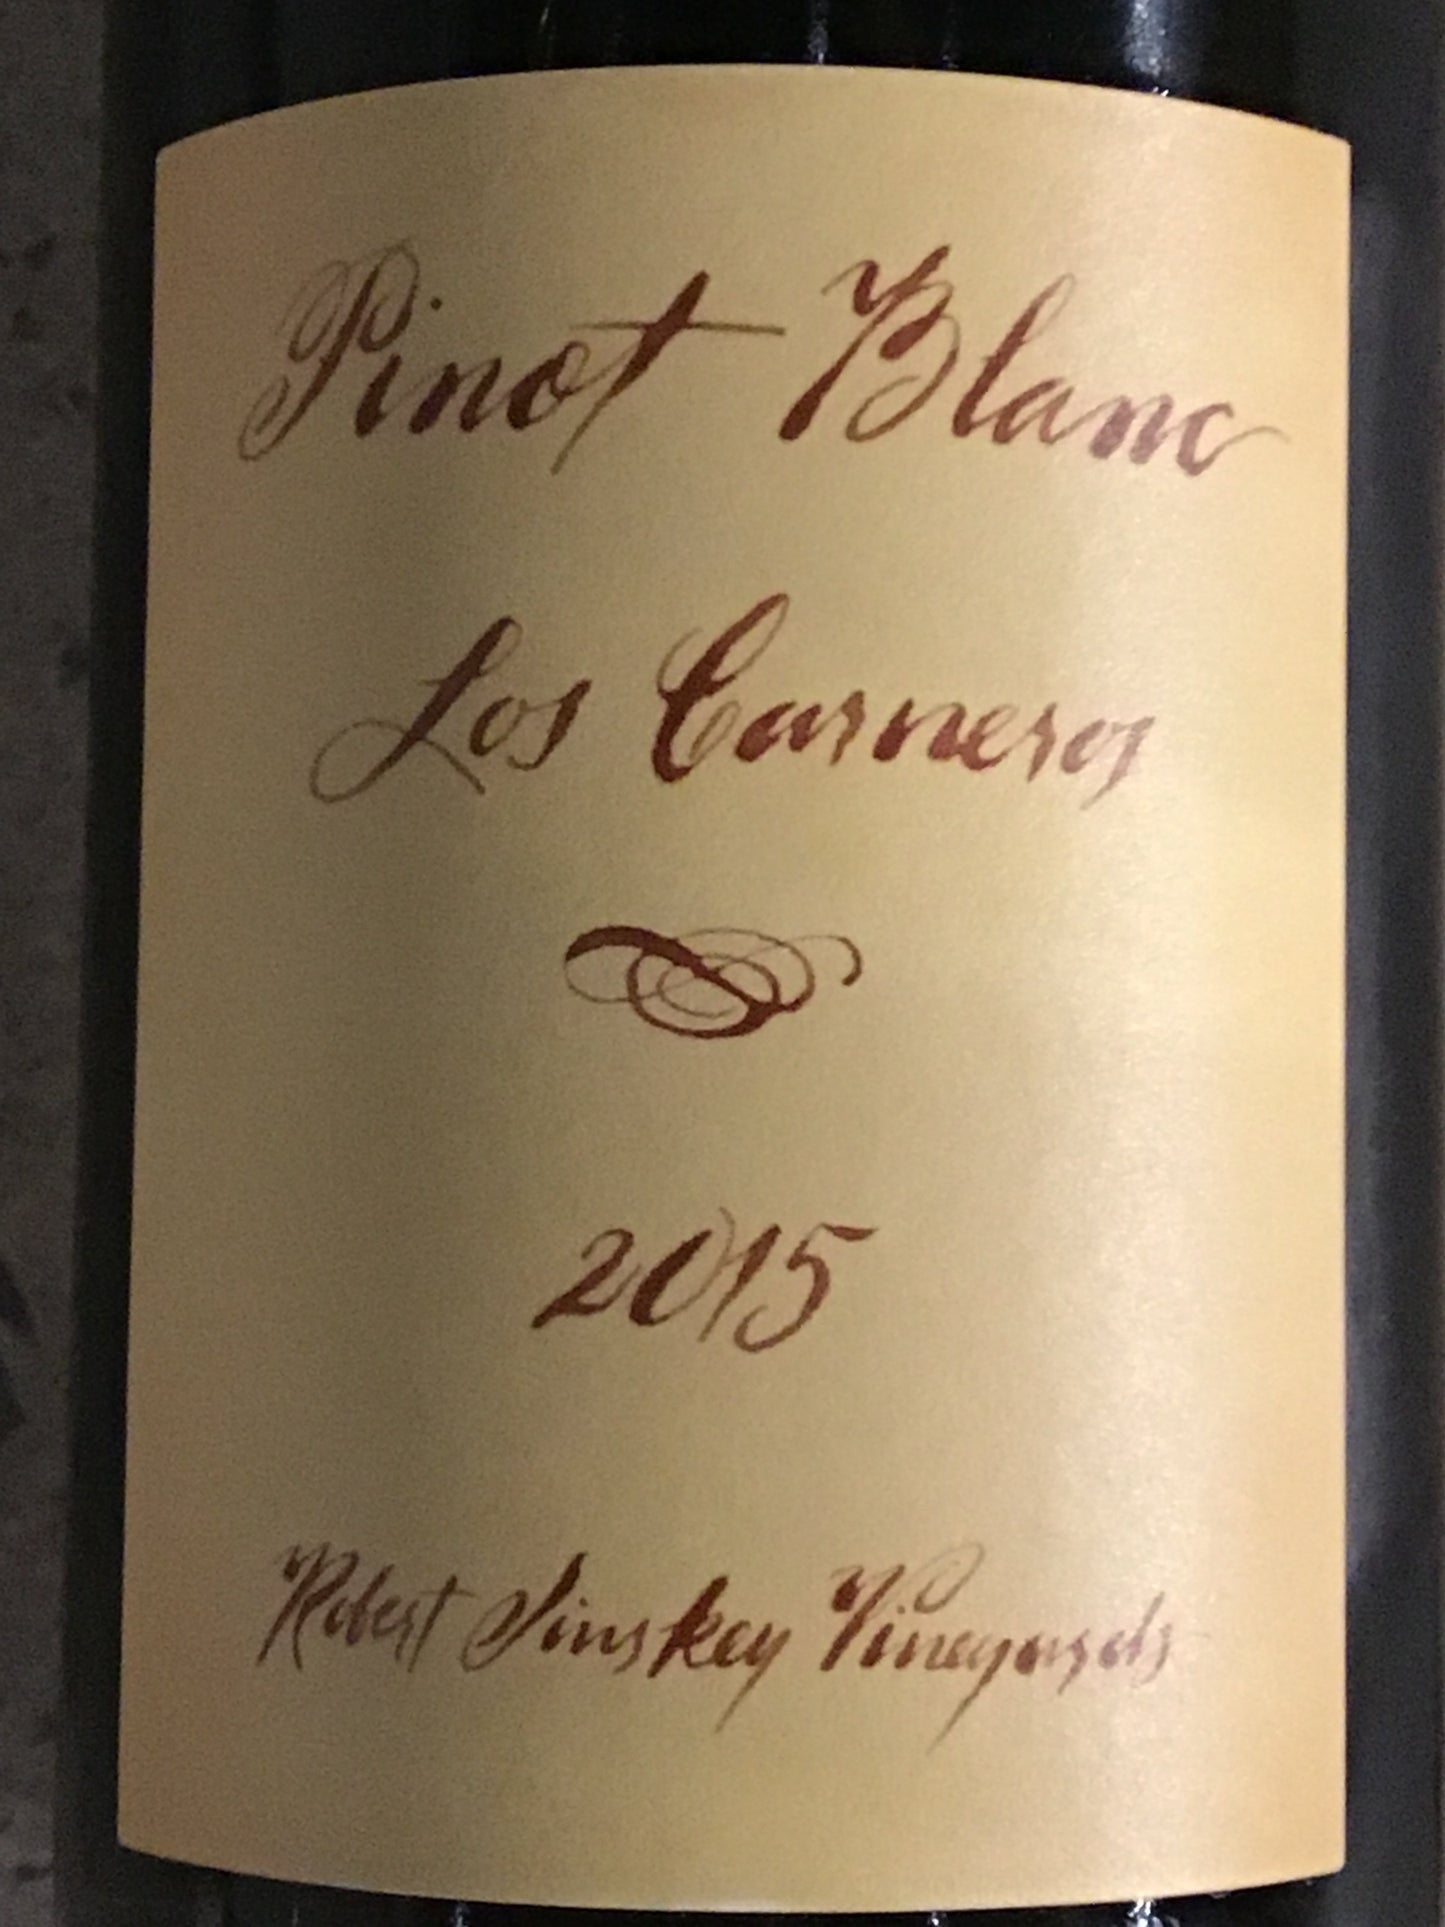 Robert Sinskey 'Los Carneros' - Pinot Blanc - Napa - 375 ml